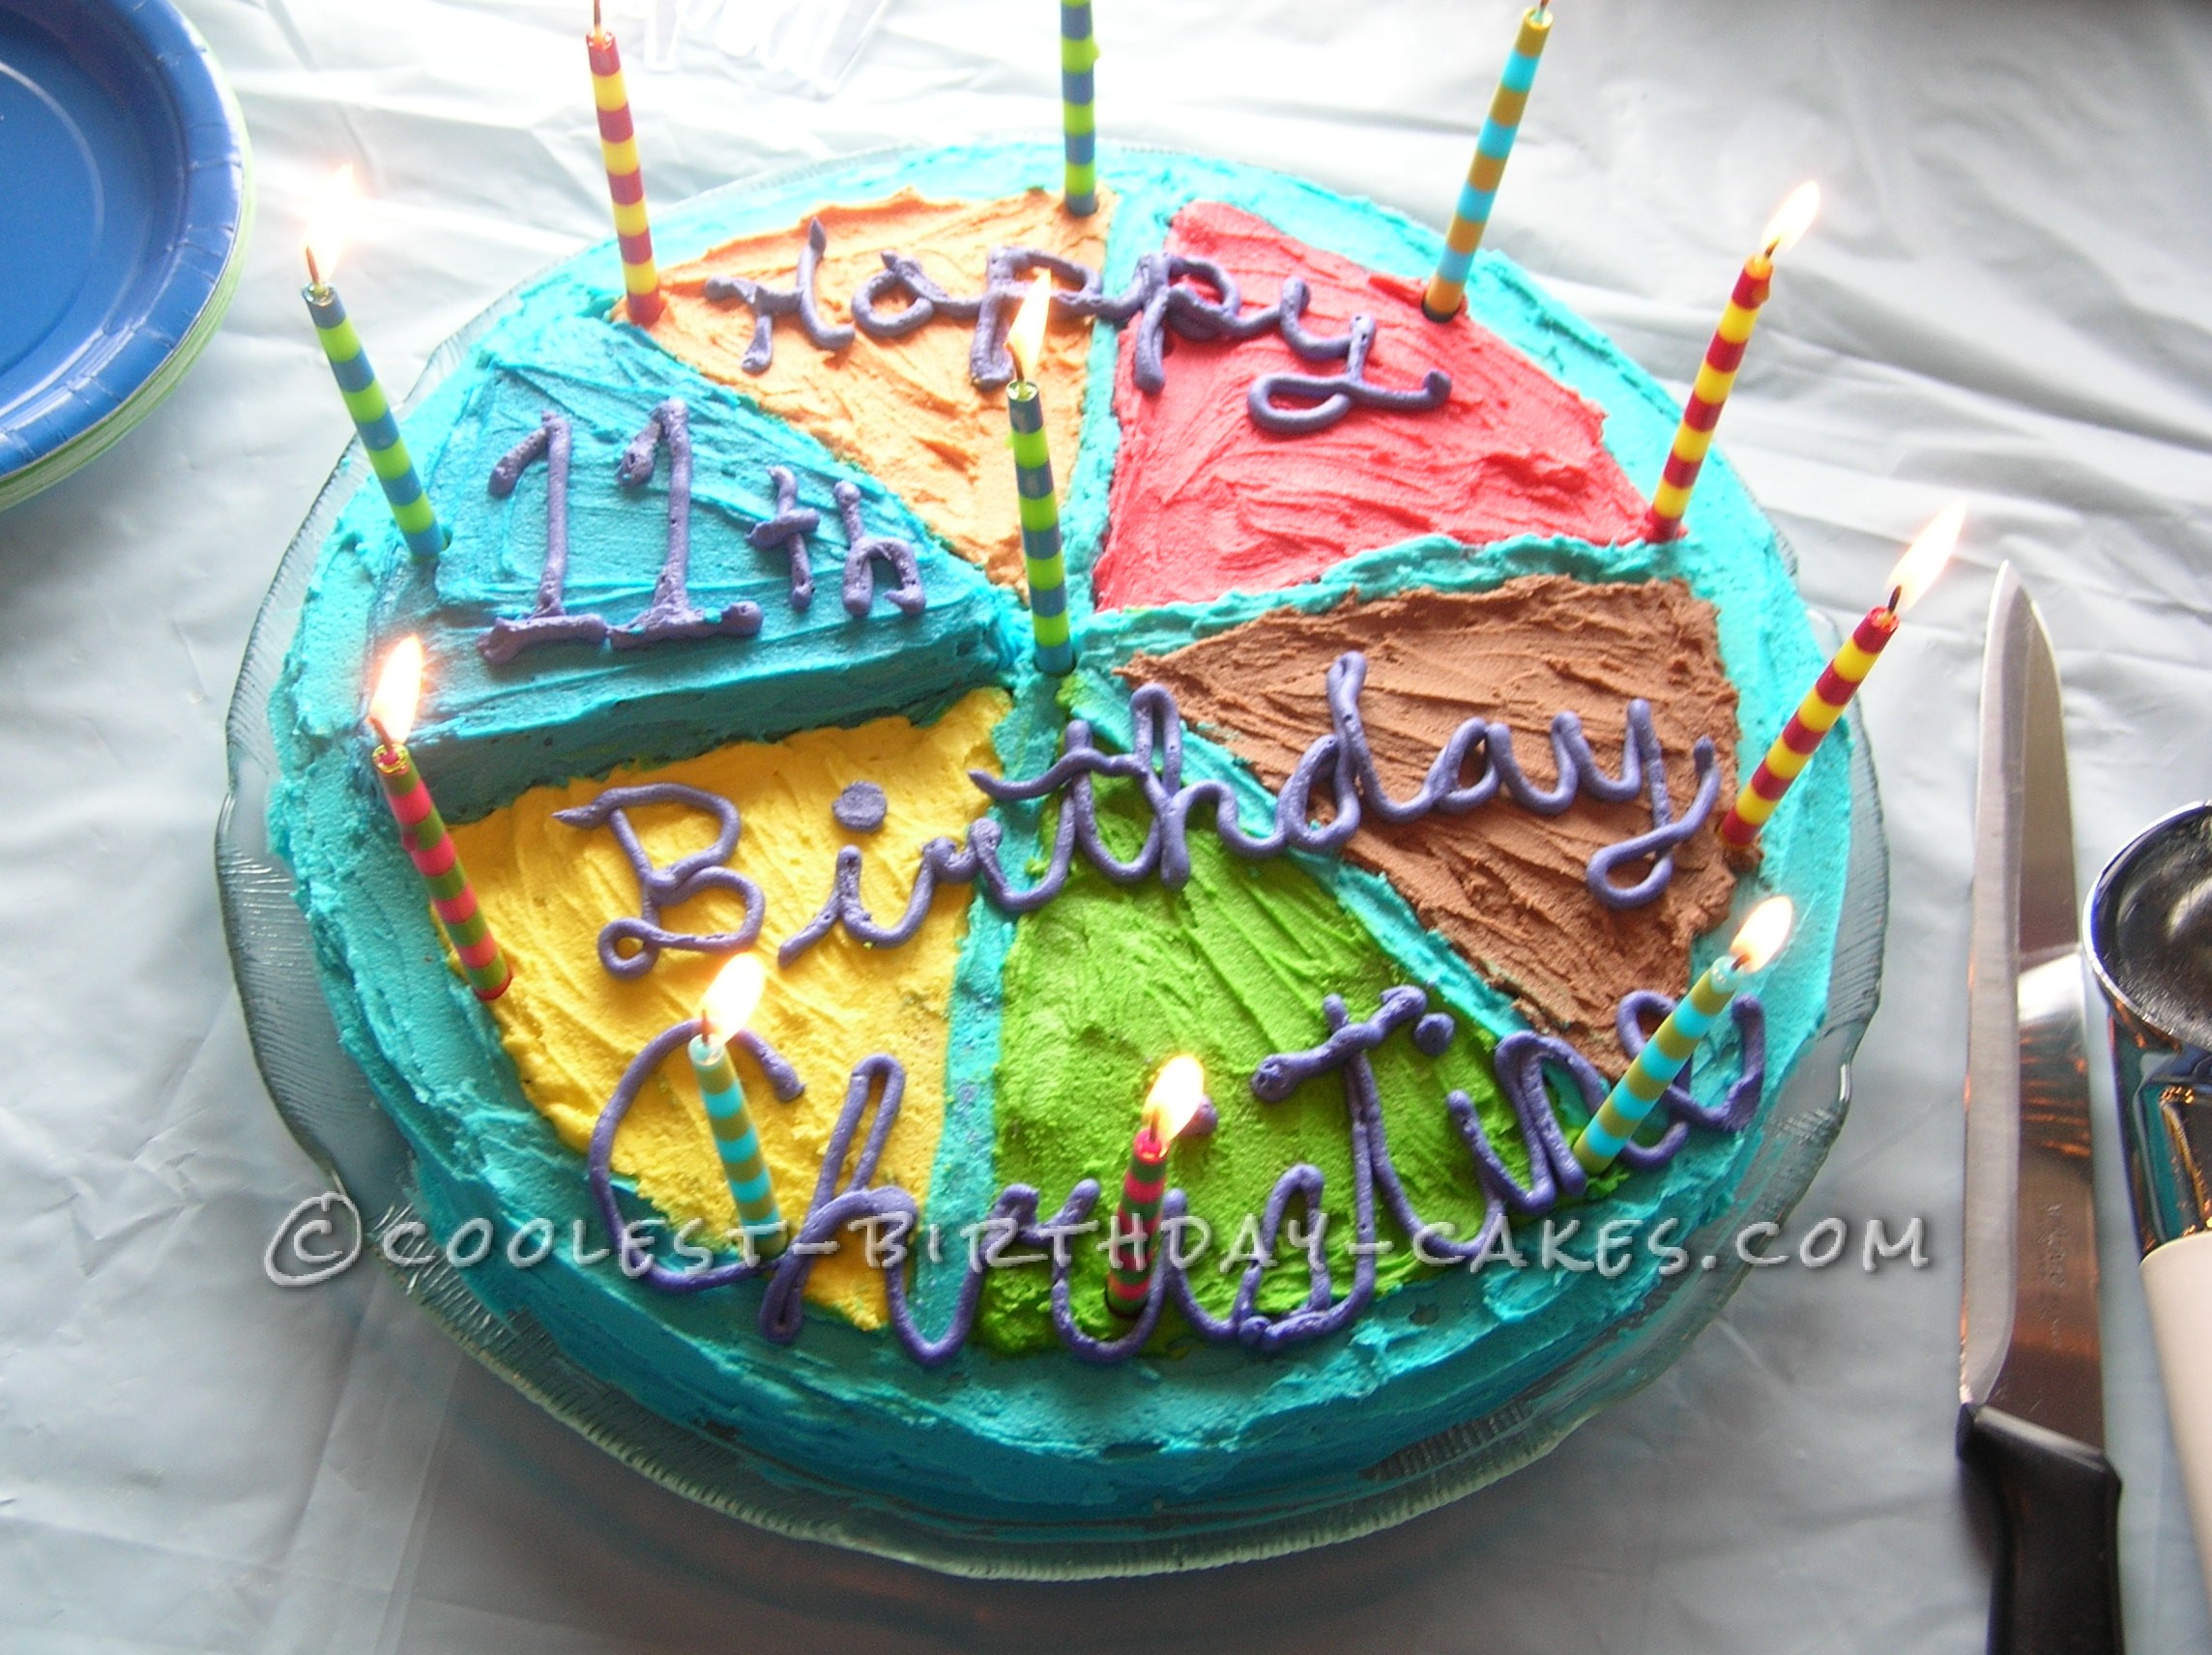 Cool Trivial Pursuit Birthday Cake